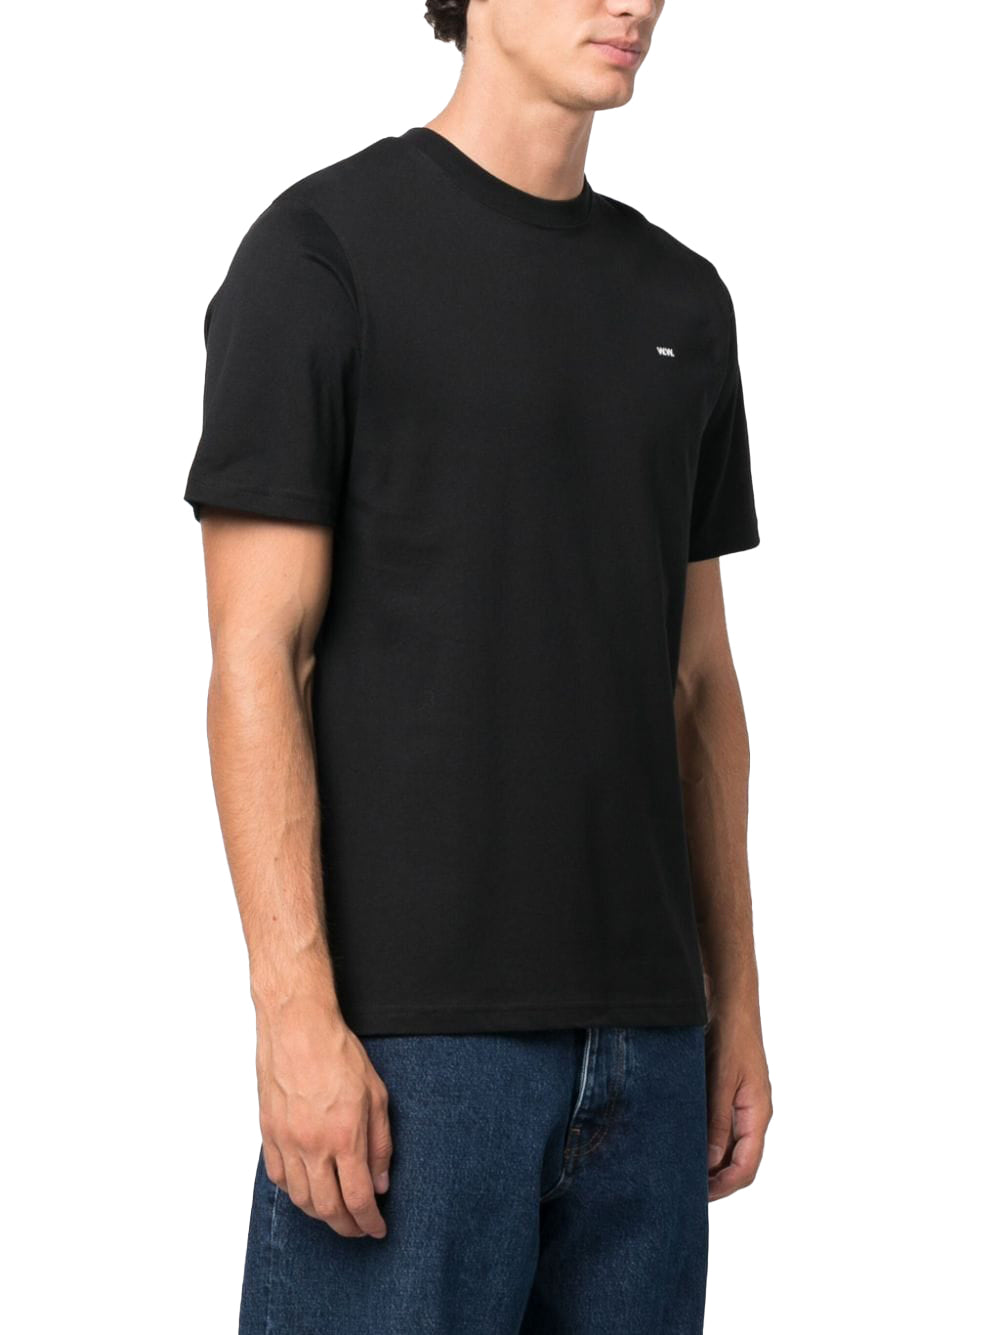 Essential Sami Black T-shirt